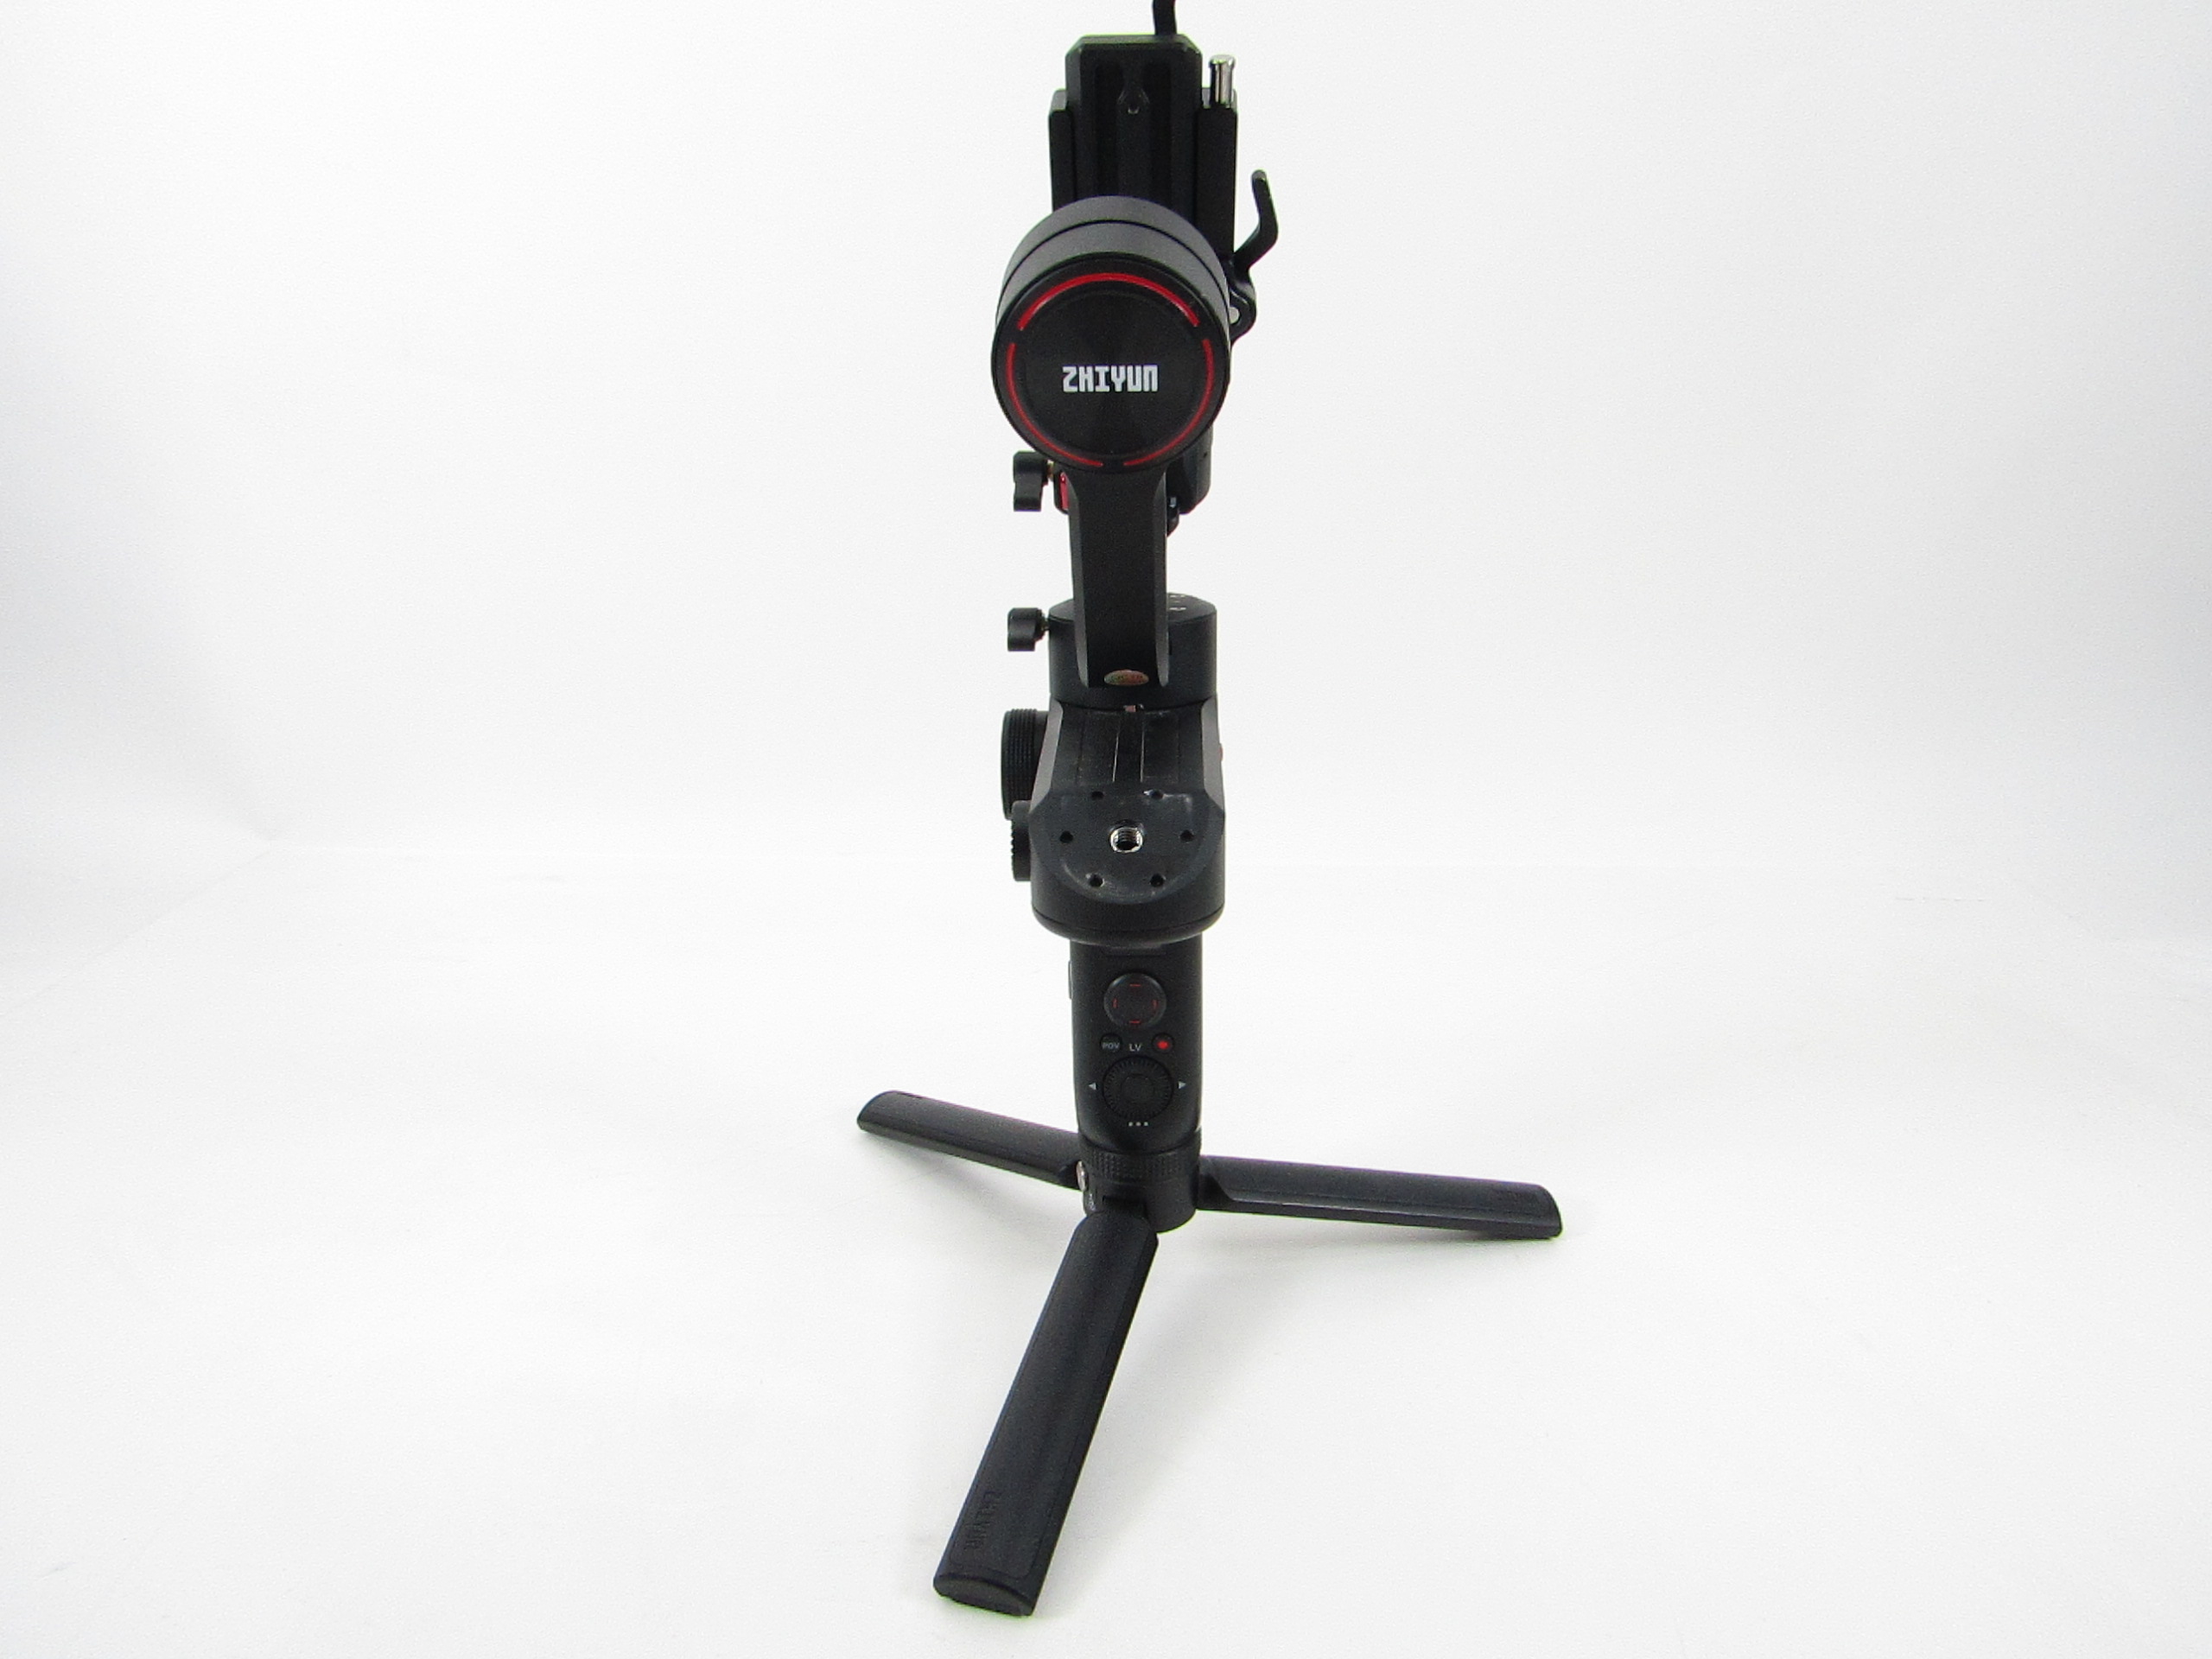 Zhiyun CR110 Weebill S 3-Axis Gimbal DSLR Camera Stabilizer